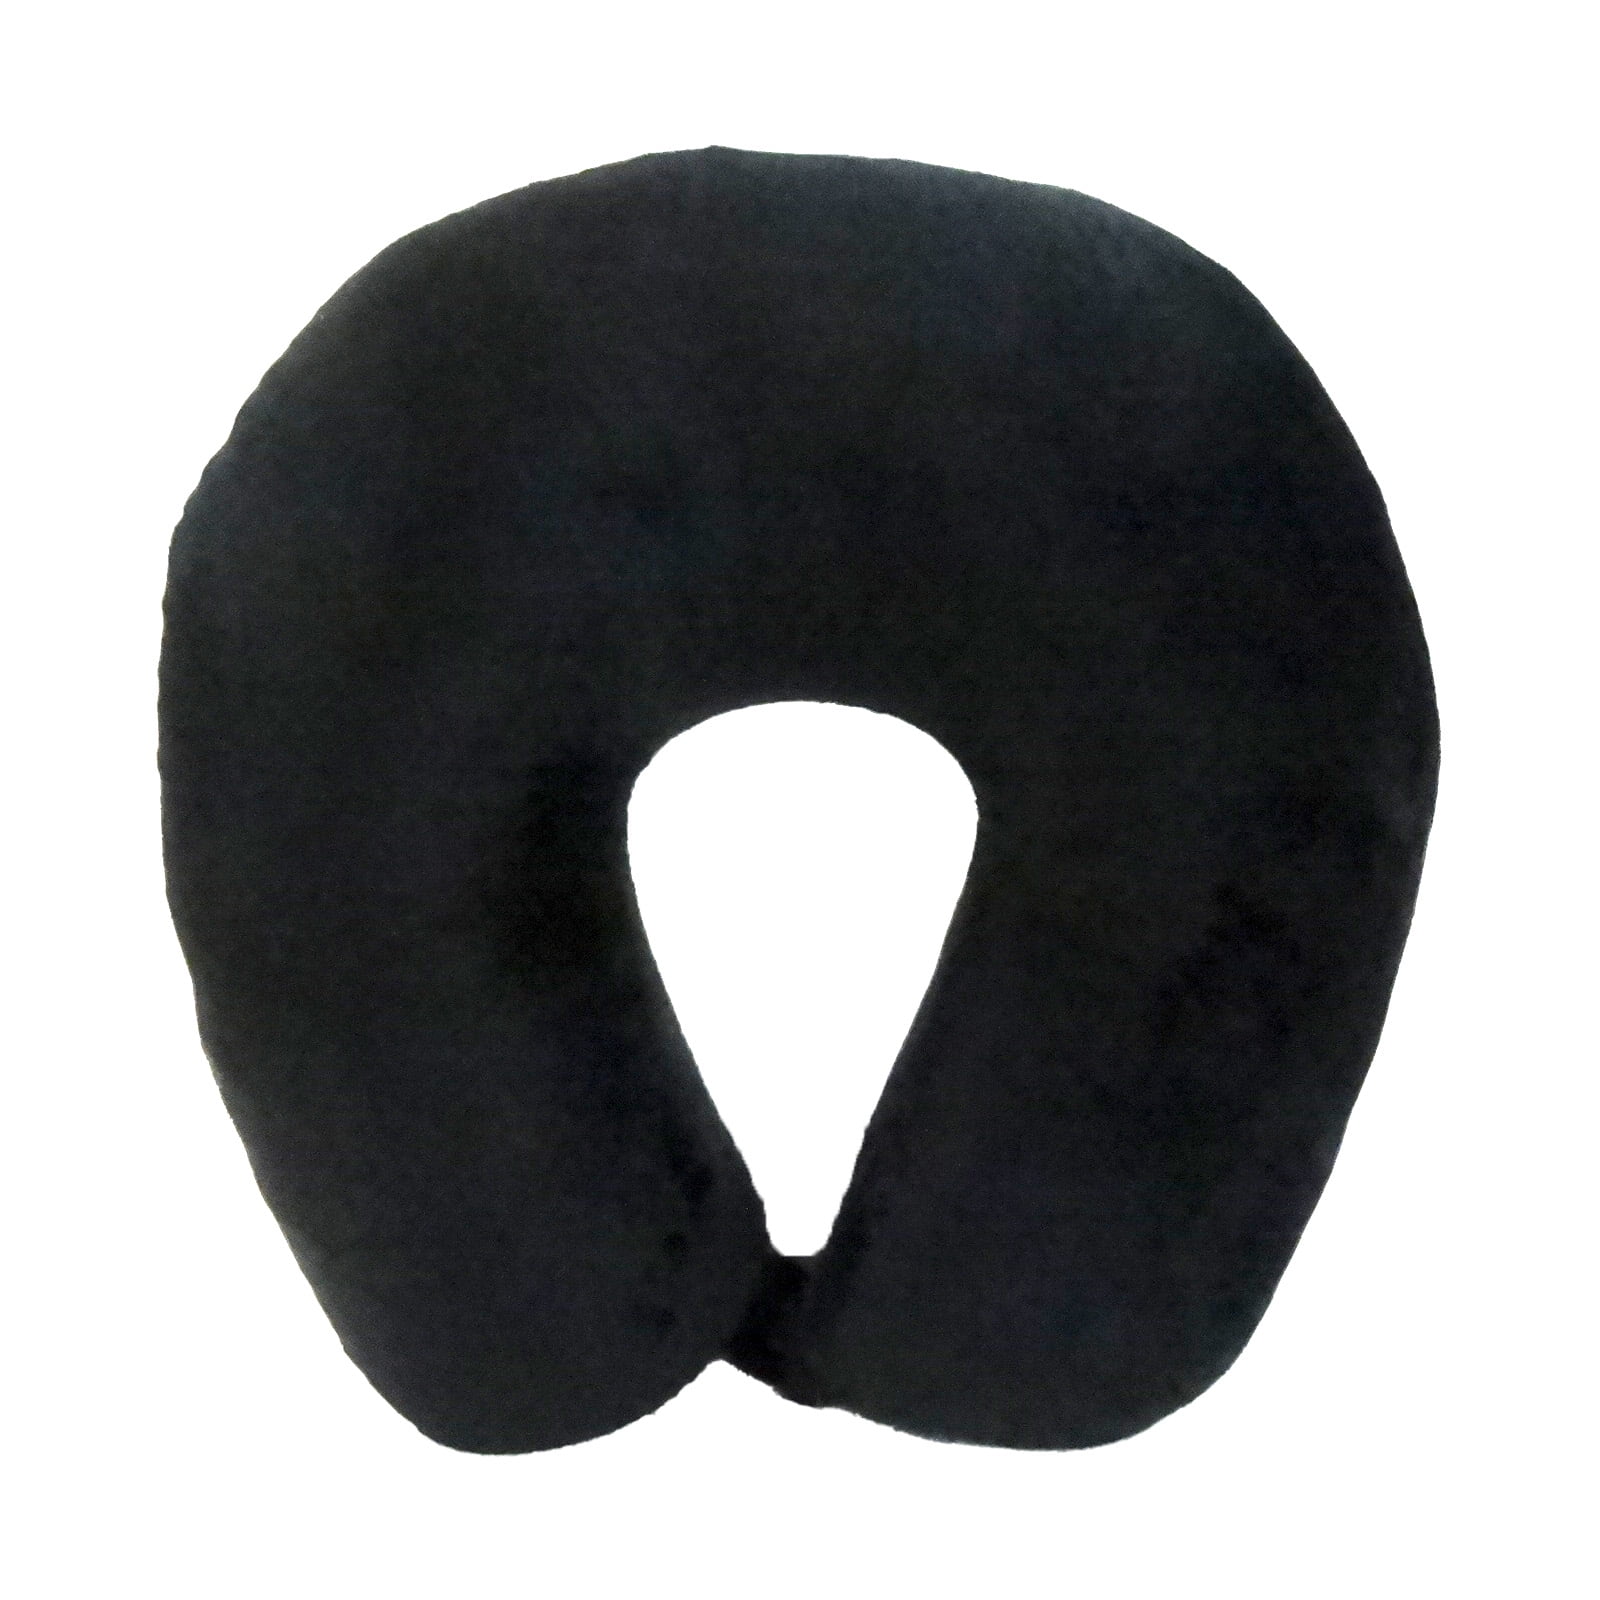 Protege Microfiber Travel Neck Pillow,100% Polyester Fleece Knit, Black,  One Size